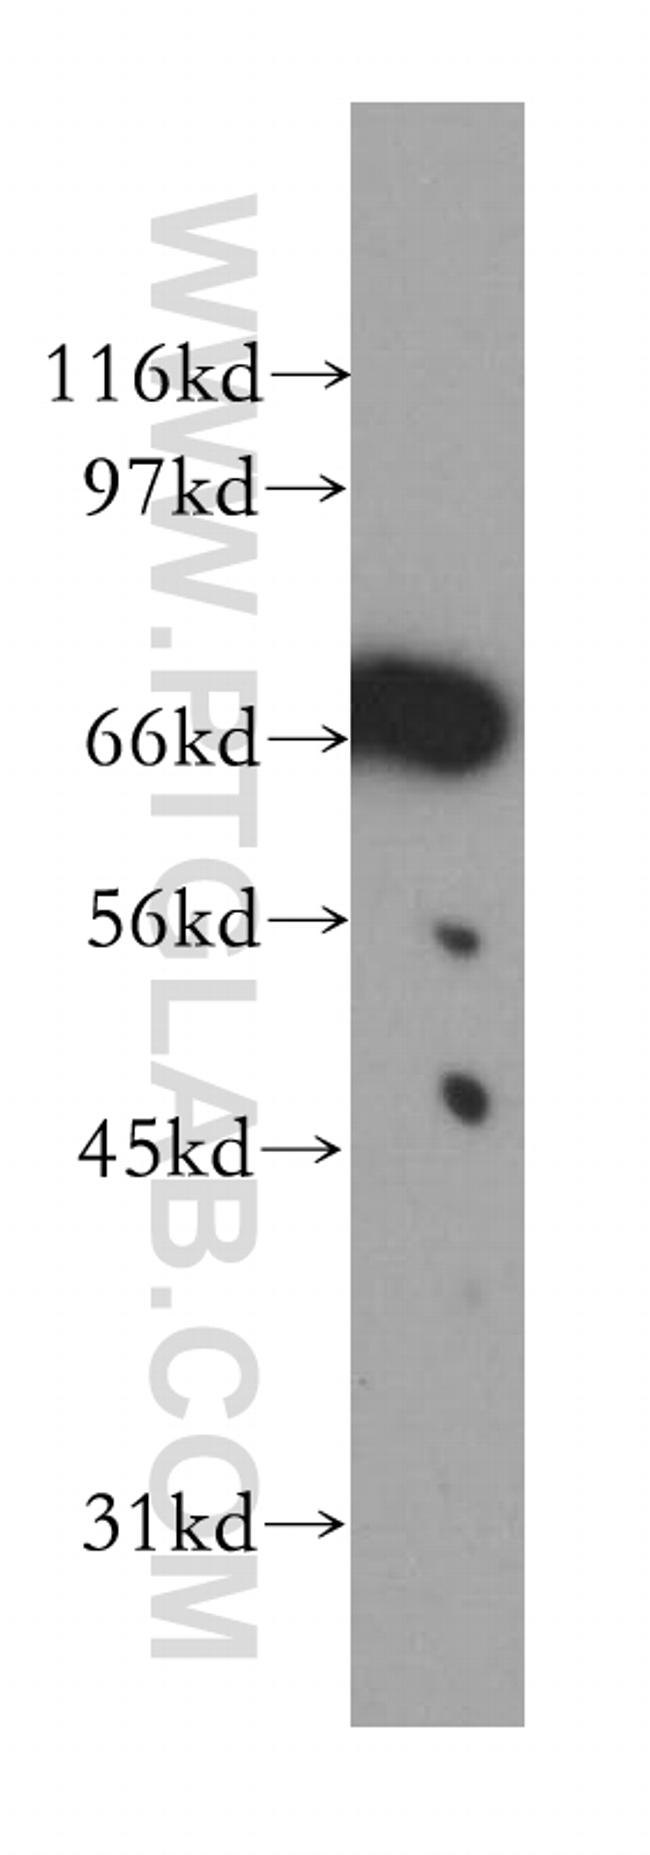 Lamin B1 Antibody in Western Blot (WB)